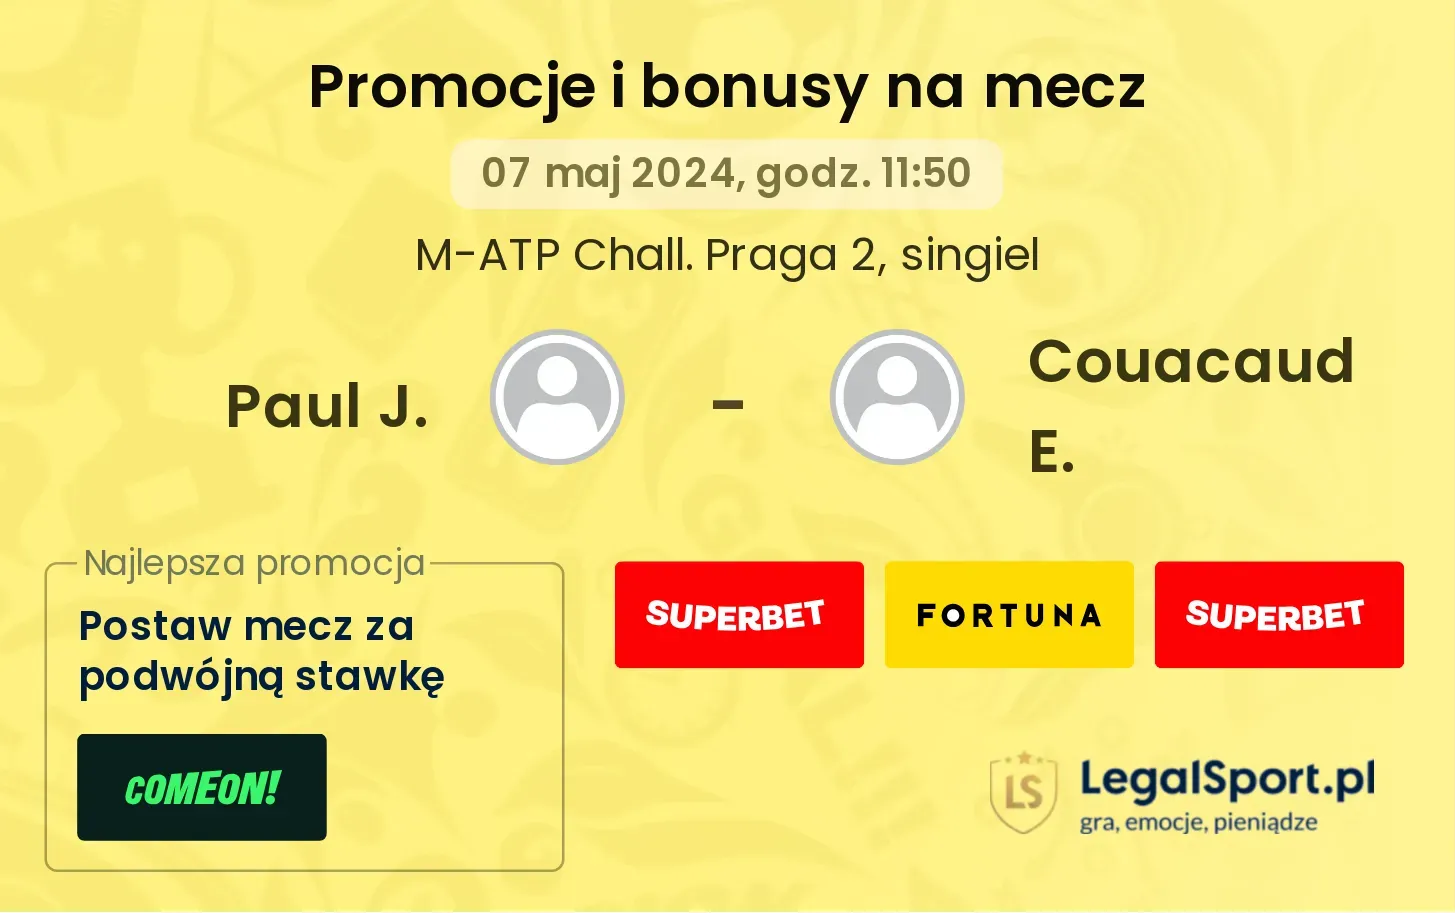 Paul J. - Couacaud E. promocje bonusy na mecz